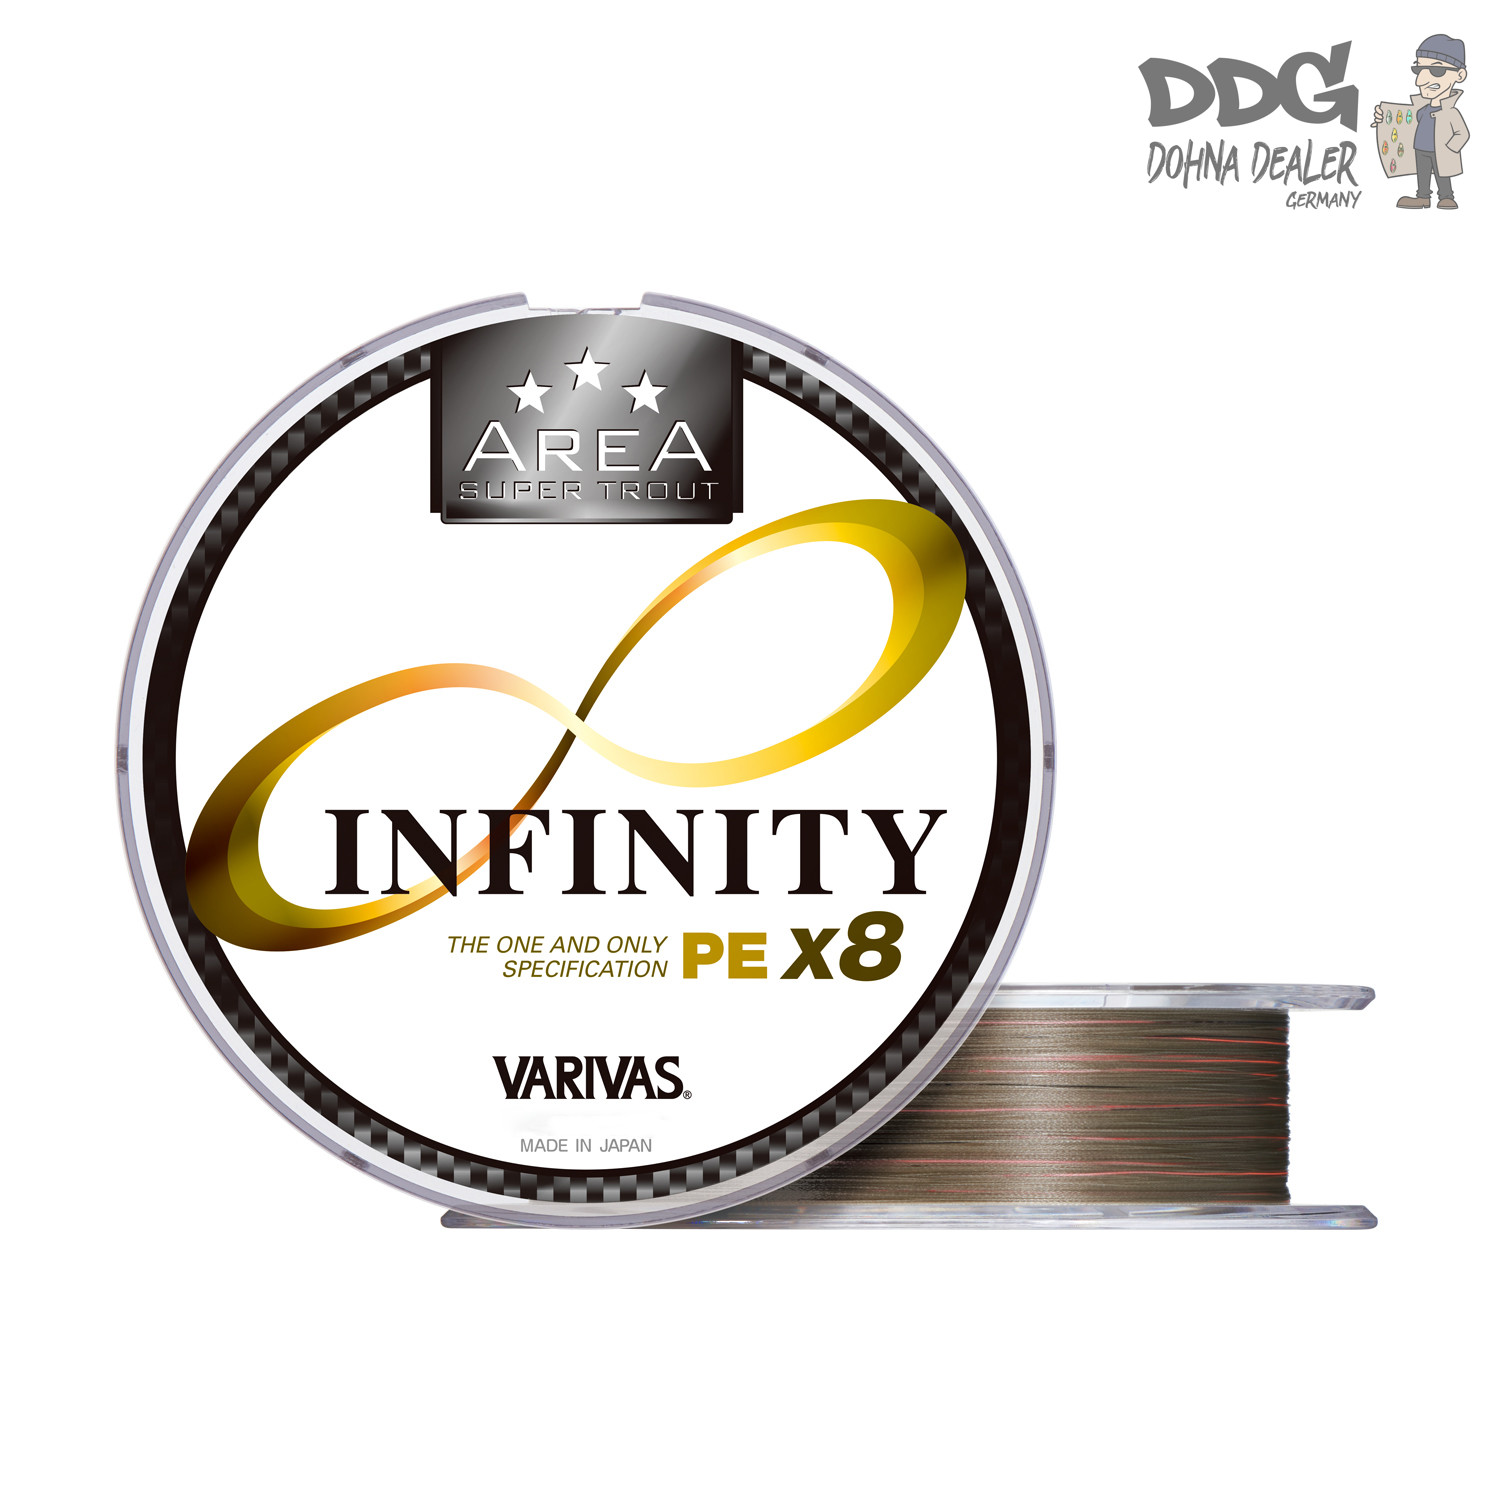 Varivas Area Infinity PE X8_1